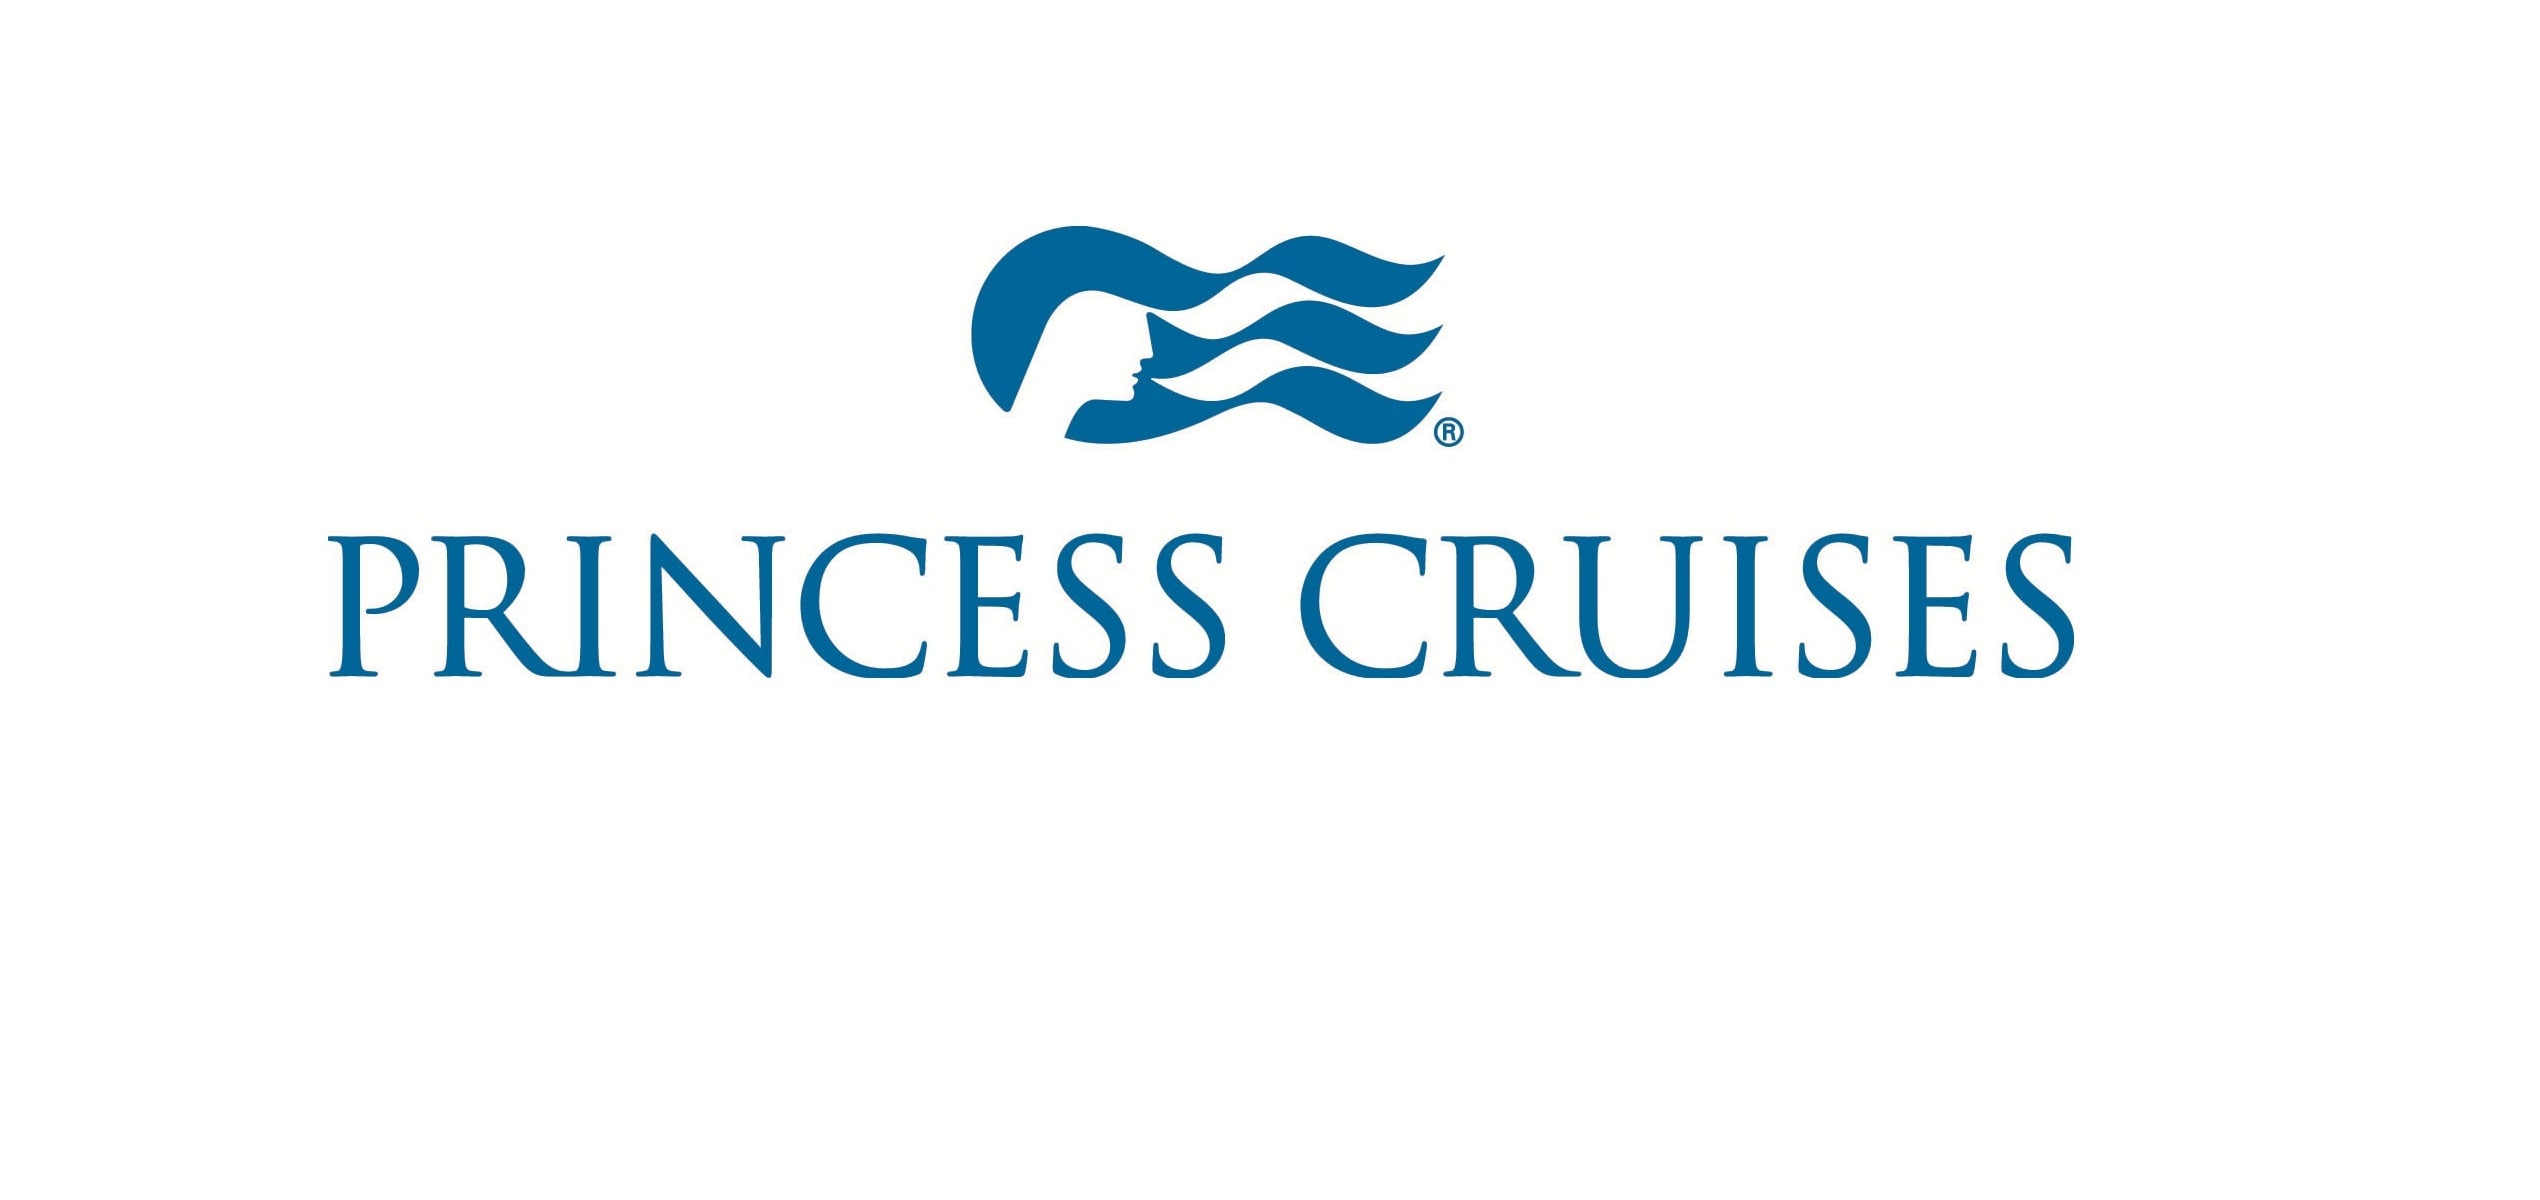 Image result for princess cruises logo